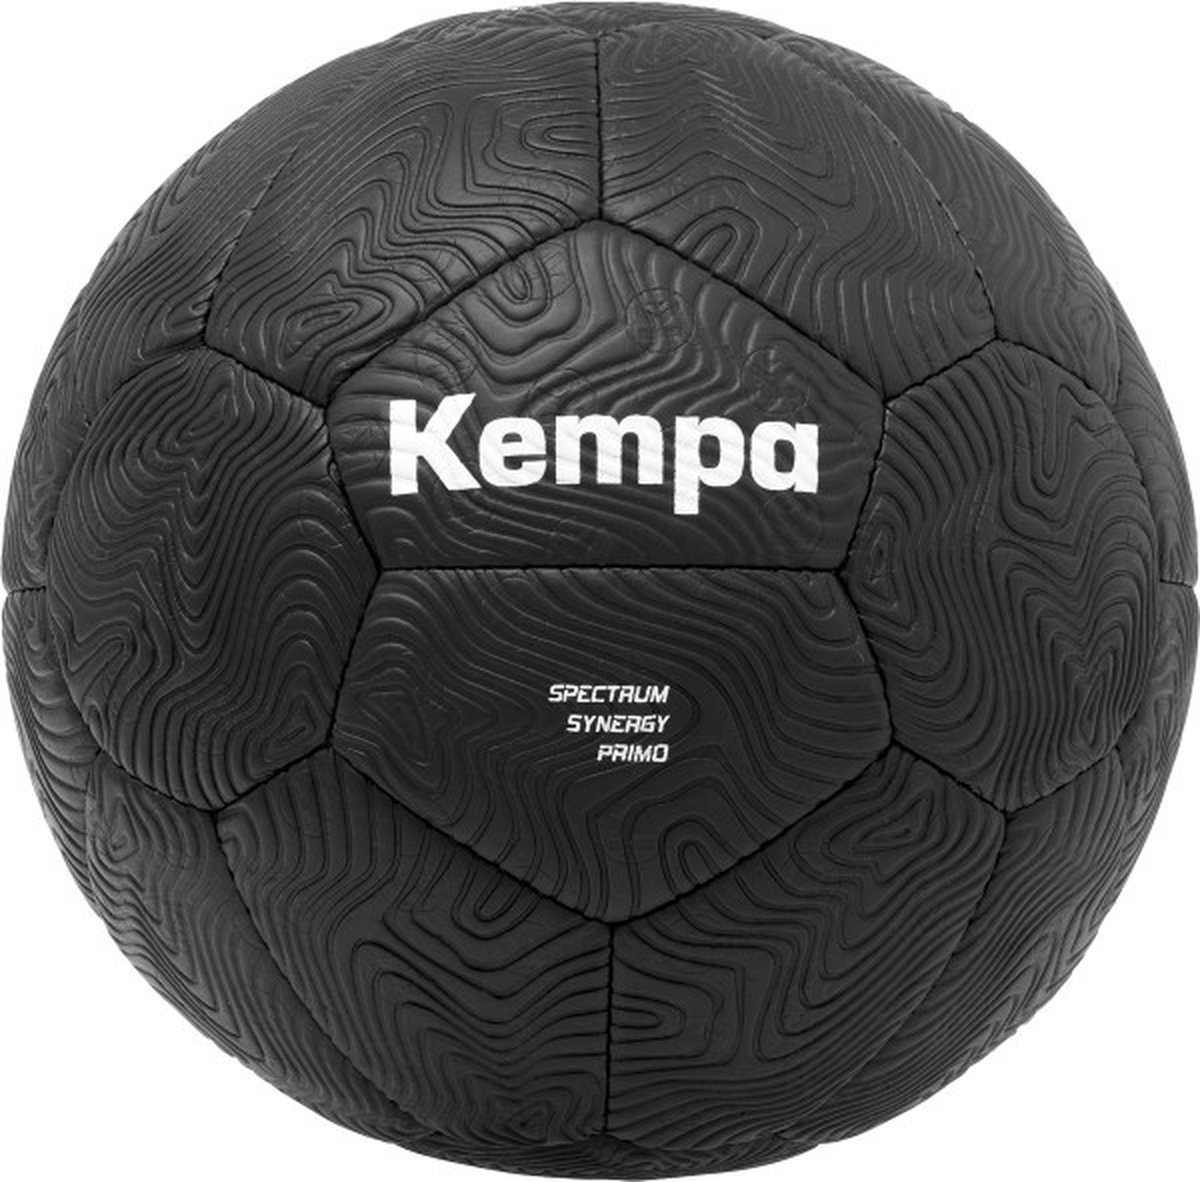 Kempa Spectrum Synergy Primo - Handballen - zwart